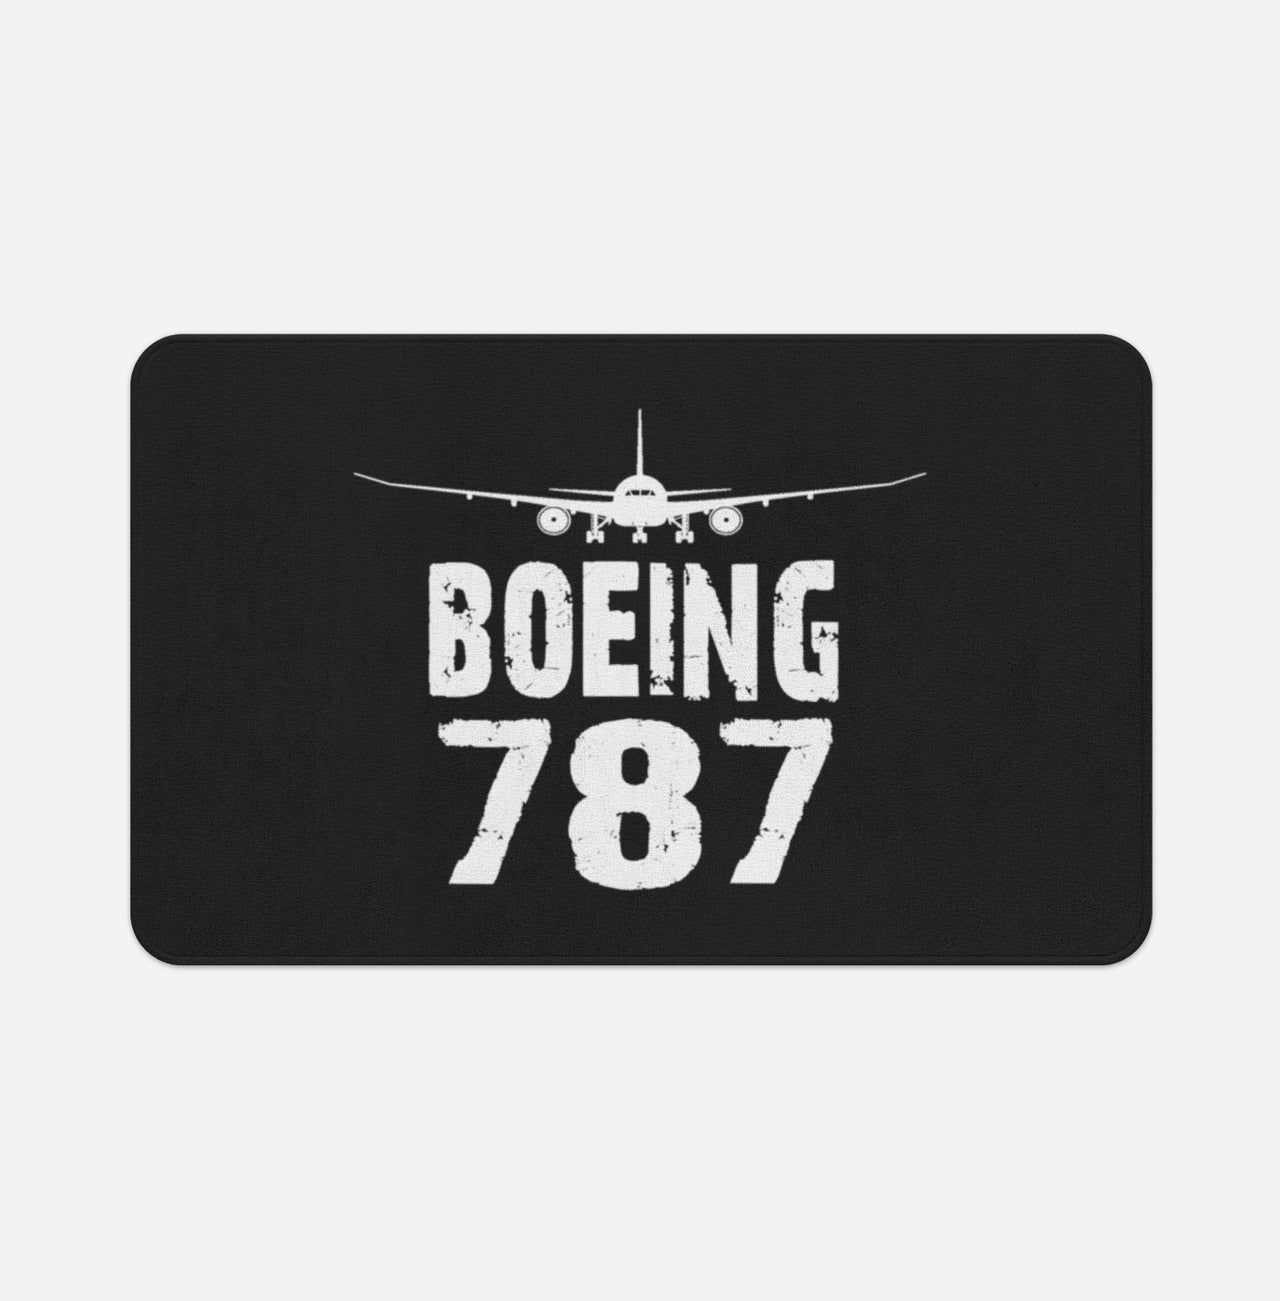 Boeing 787 & Plane Designed Bath Mats